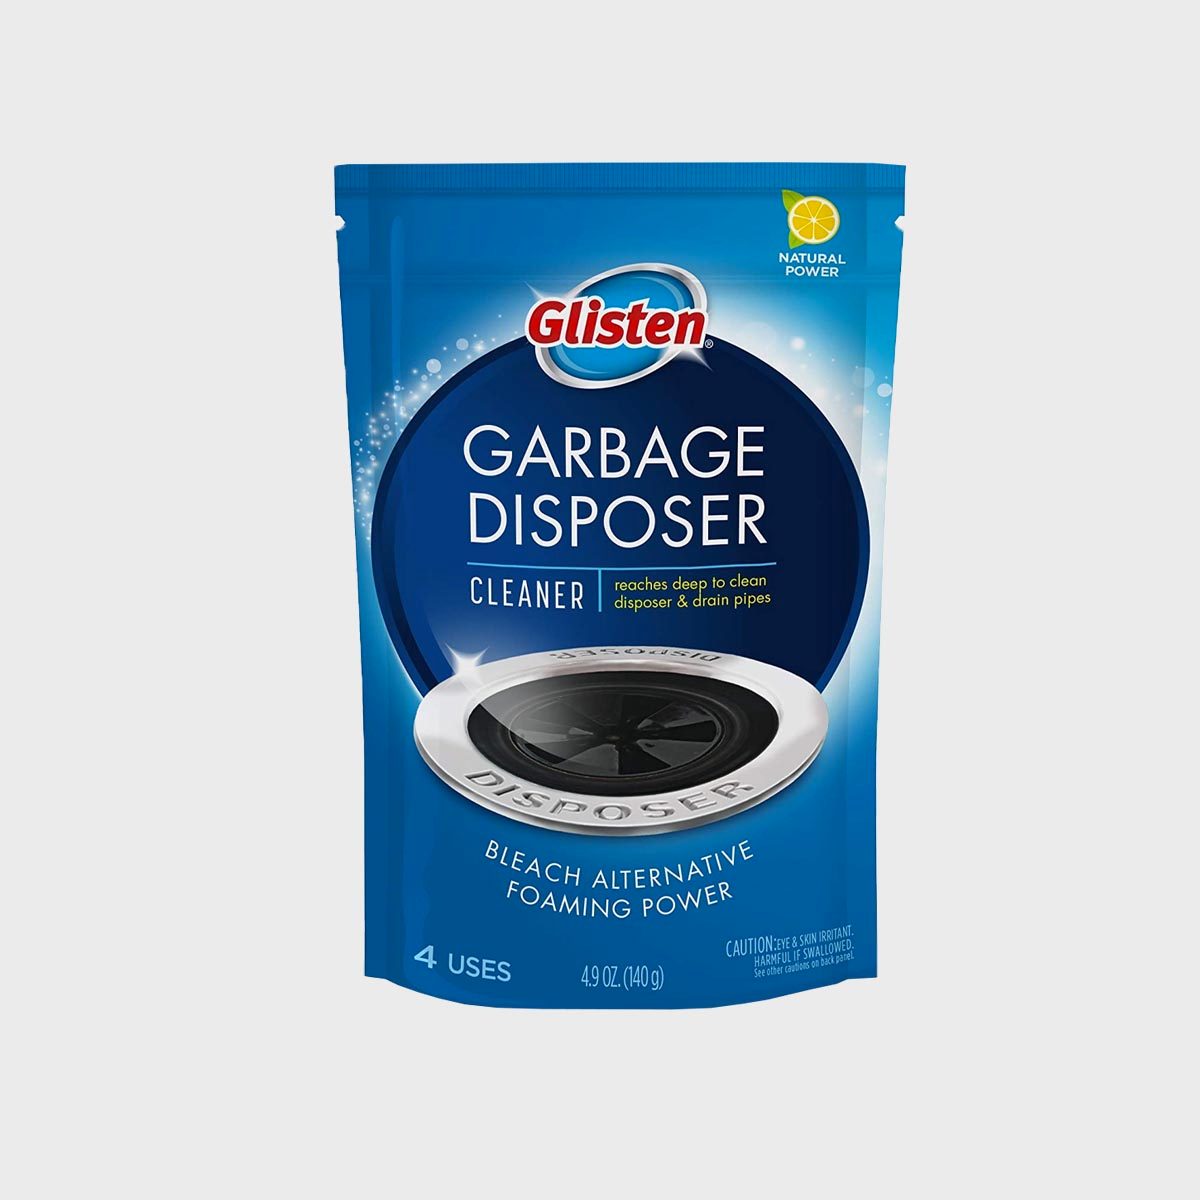 https://www.rd.com/wp-content/uploads/2021/11/Glisten-Garbage-Disposer-Cleaner-ecomm.jpg?fit=700%2C700